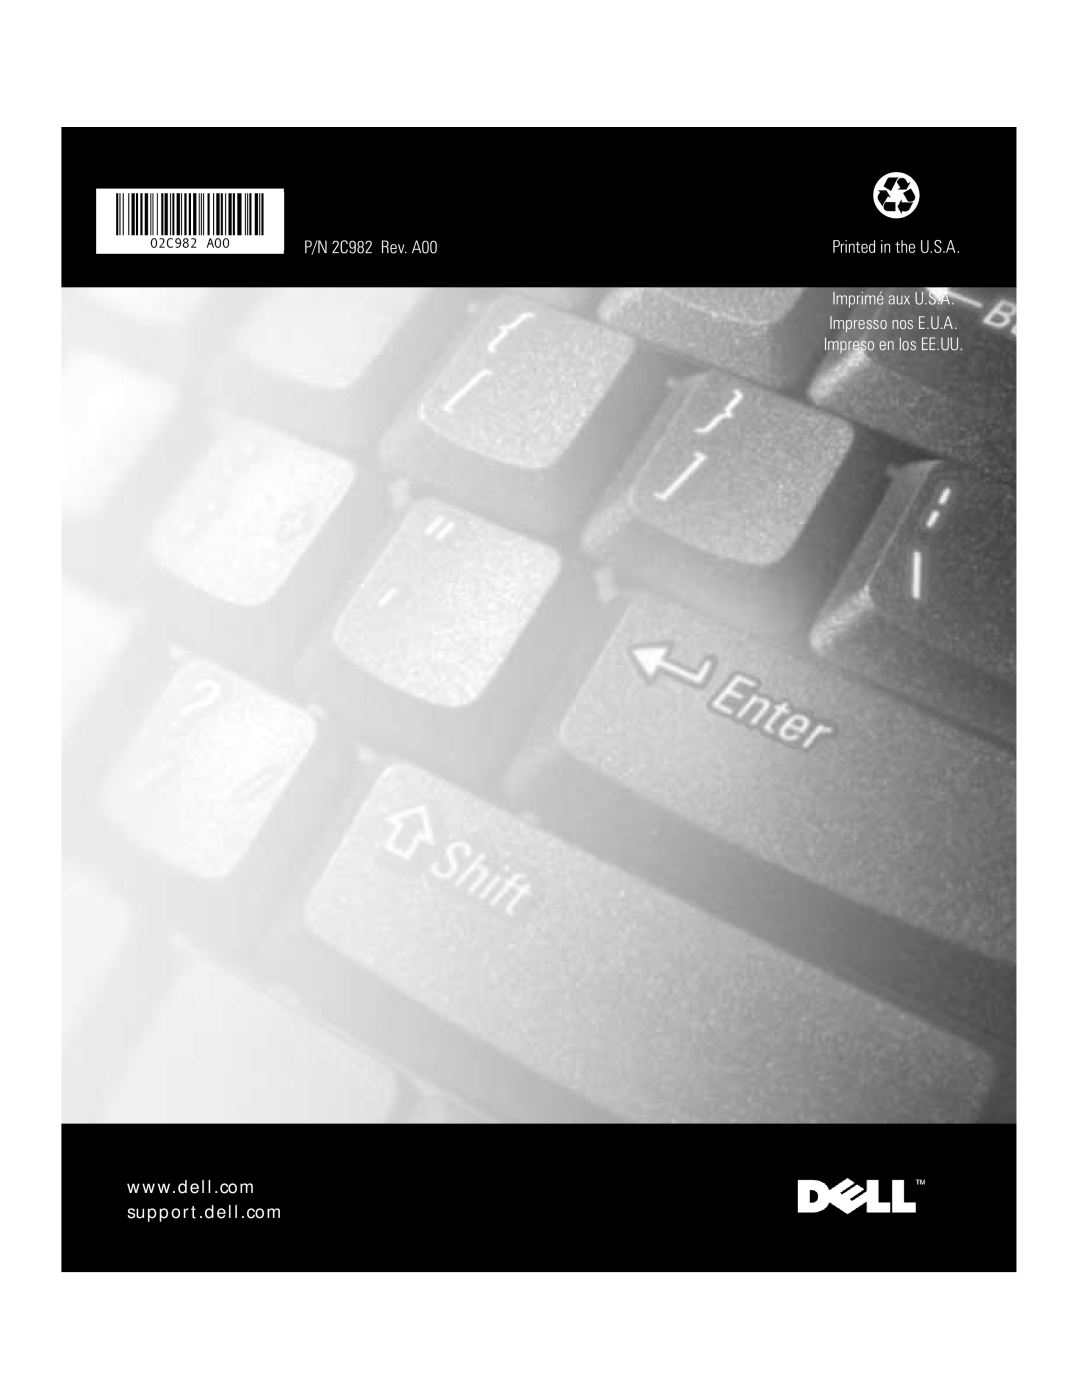 Dell L400 manual 31&5HY$, 3ULQWHGLQWKH86$, PSULPpDX86$ ,PSUHVVRQRV8$ ,PSUHVRHQORV88 